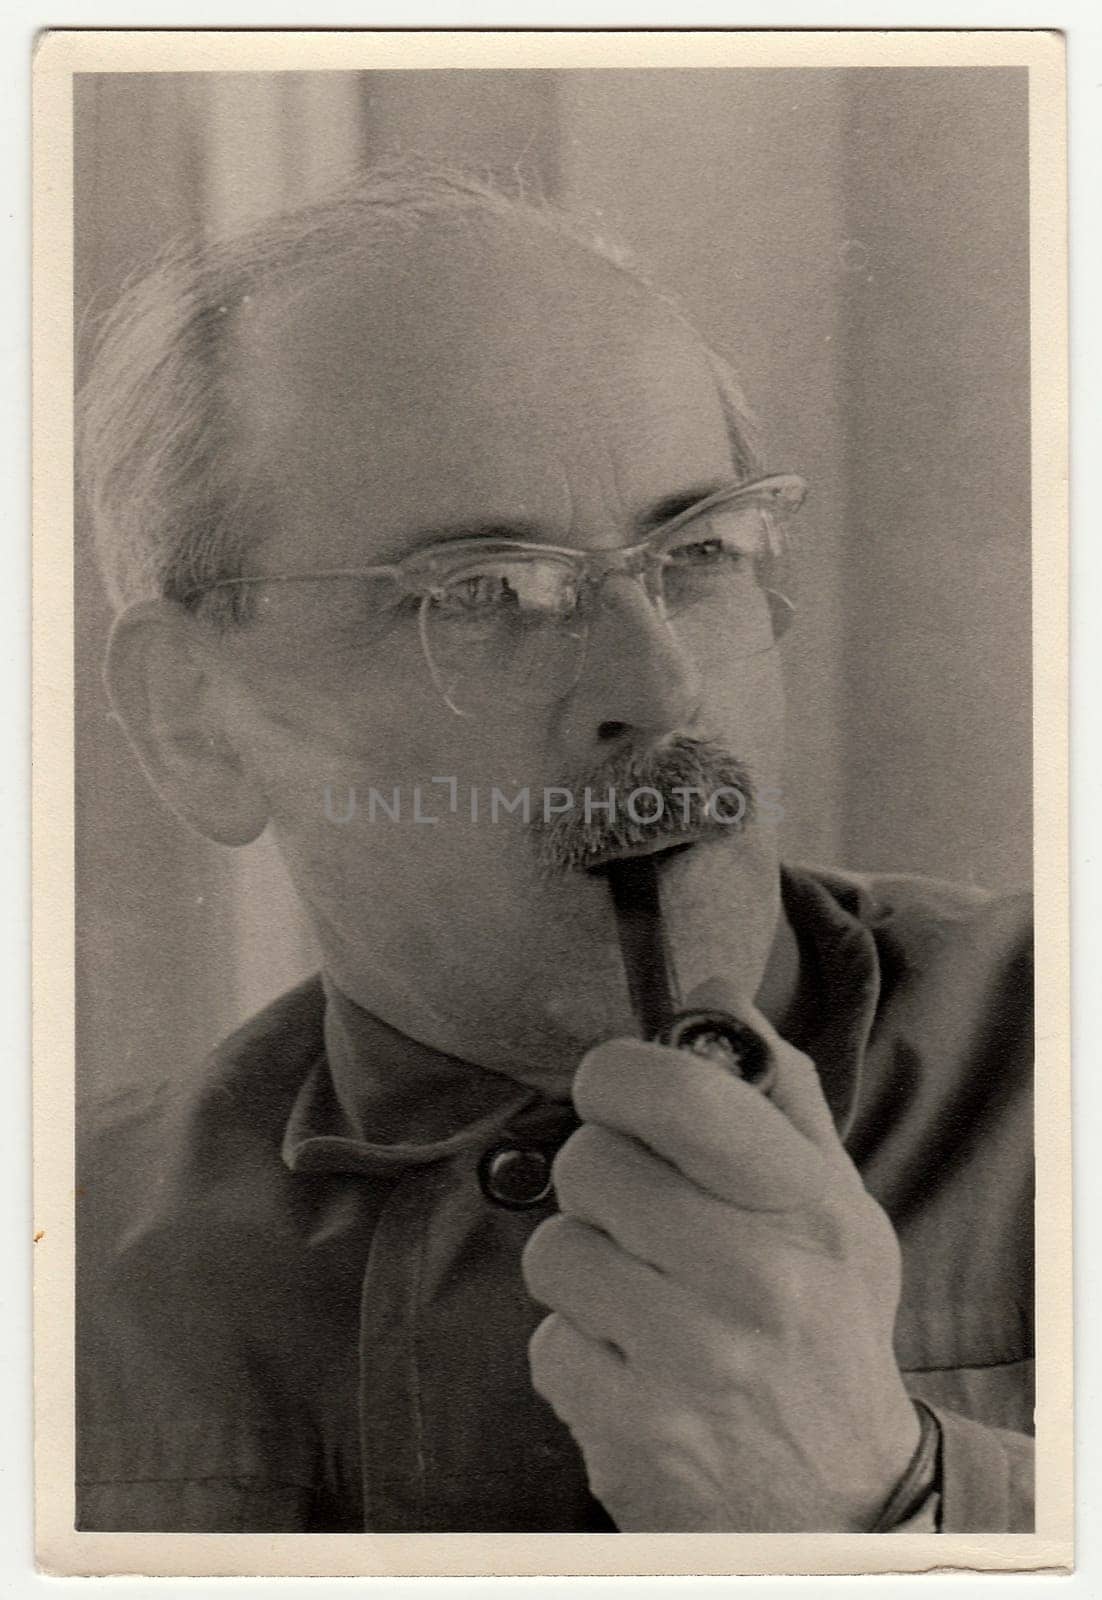 THE CZECHOSLOVAK SOCIALIST REPUBLIC - CIRCA 1950s: Vintage photo shows man with pipe.